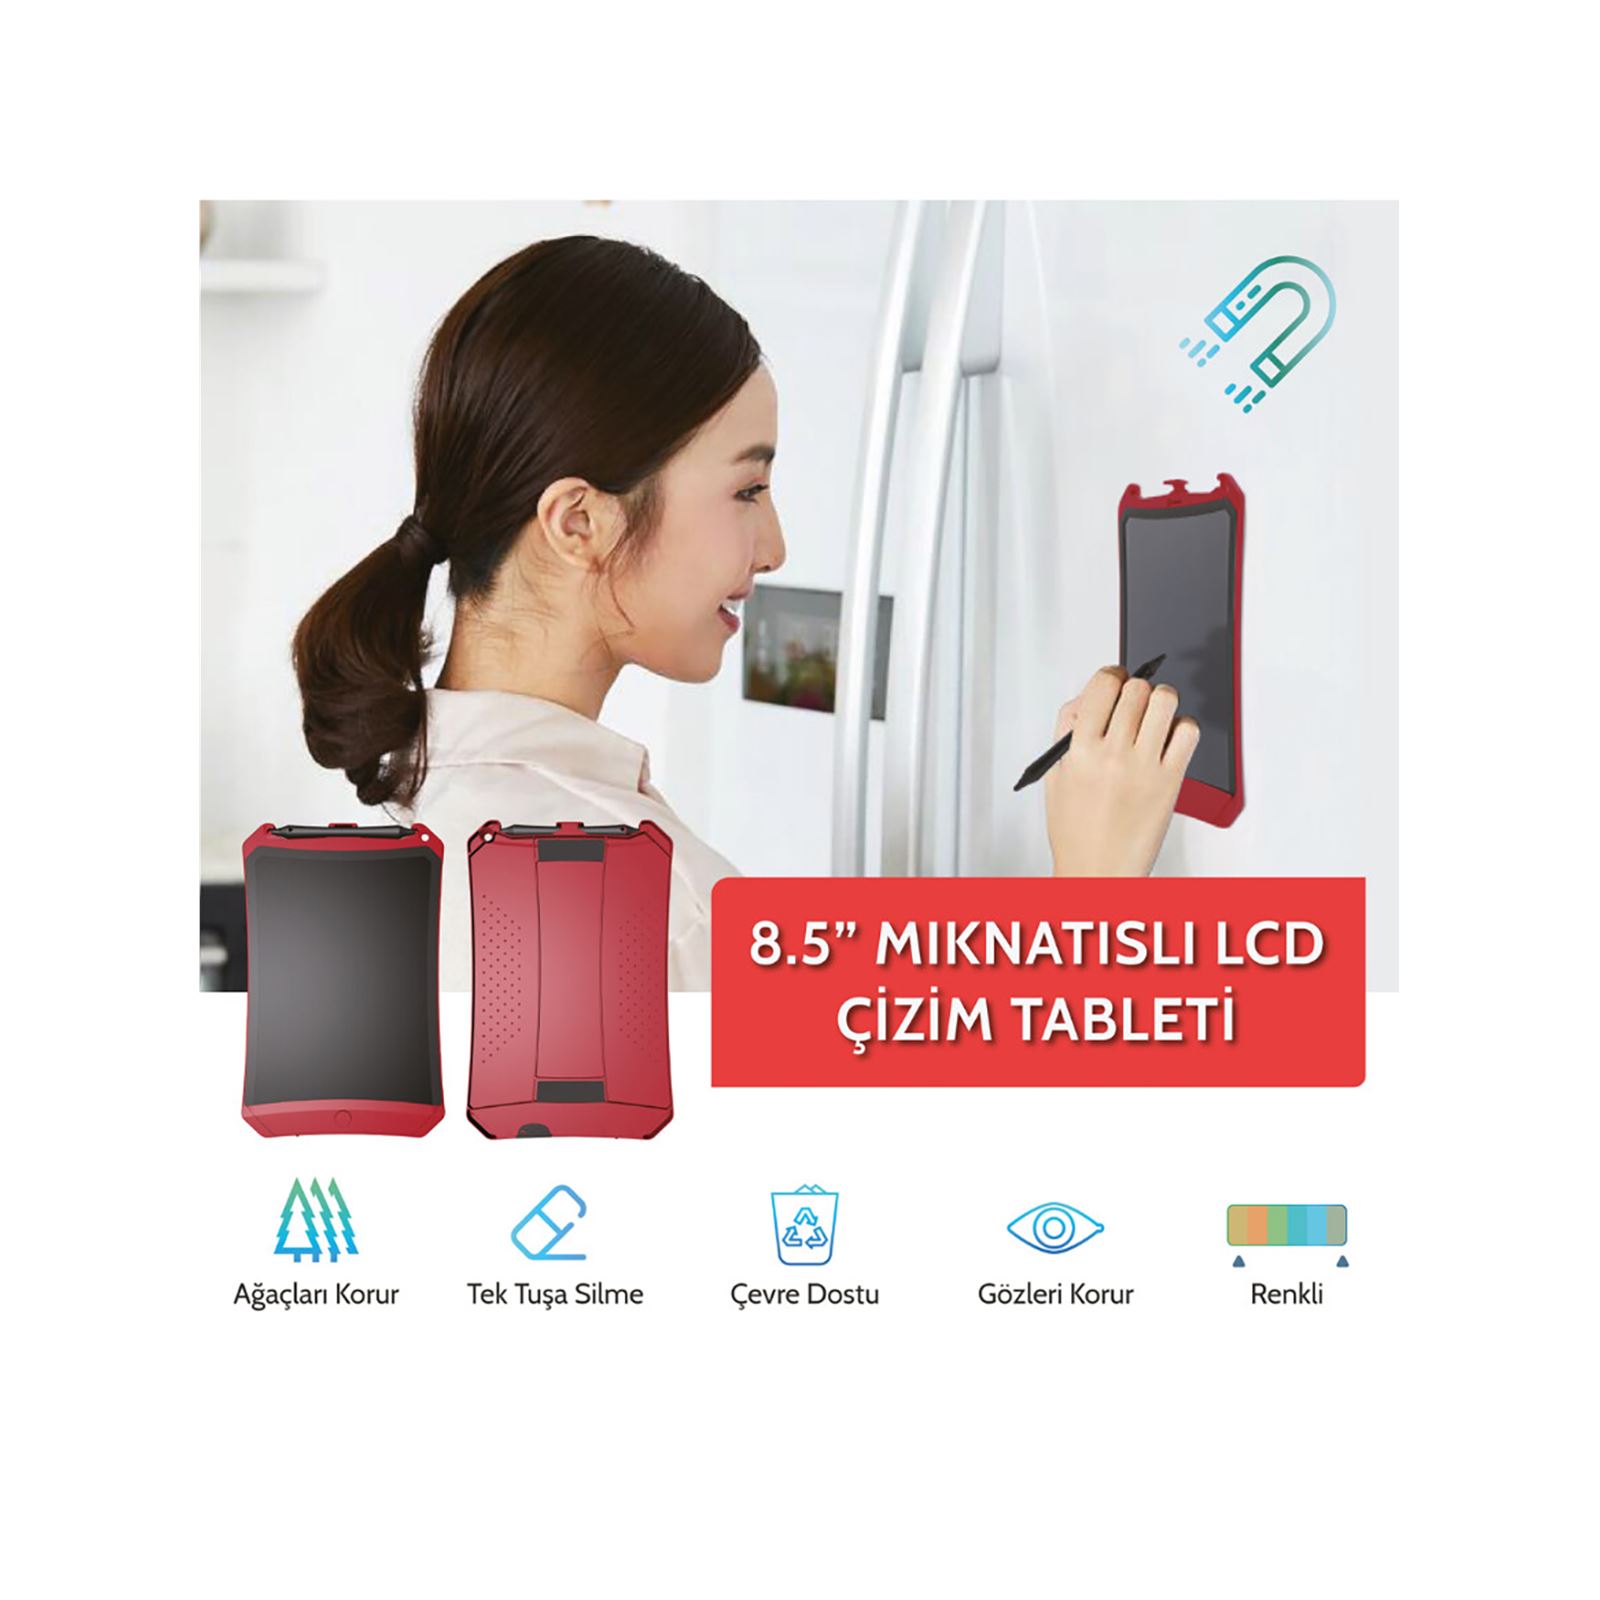 Xiaomi Wicue 8,5’’ Mıknatıslı LCD Dijital Renkli Çizim Tableti Kırmızı